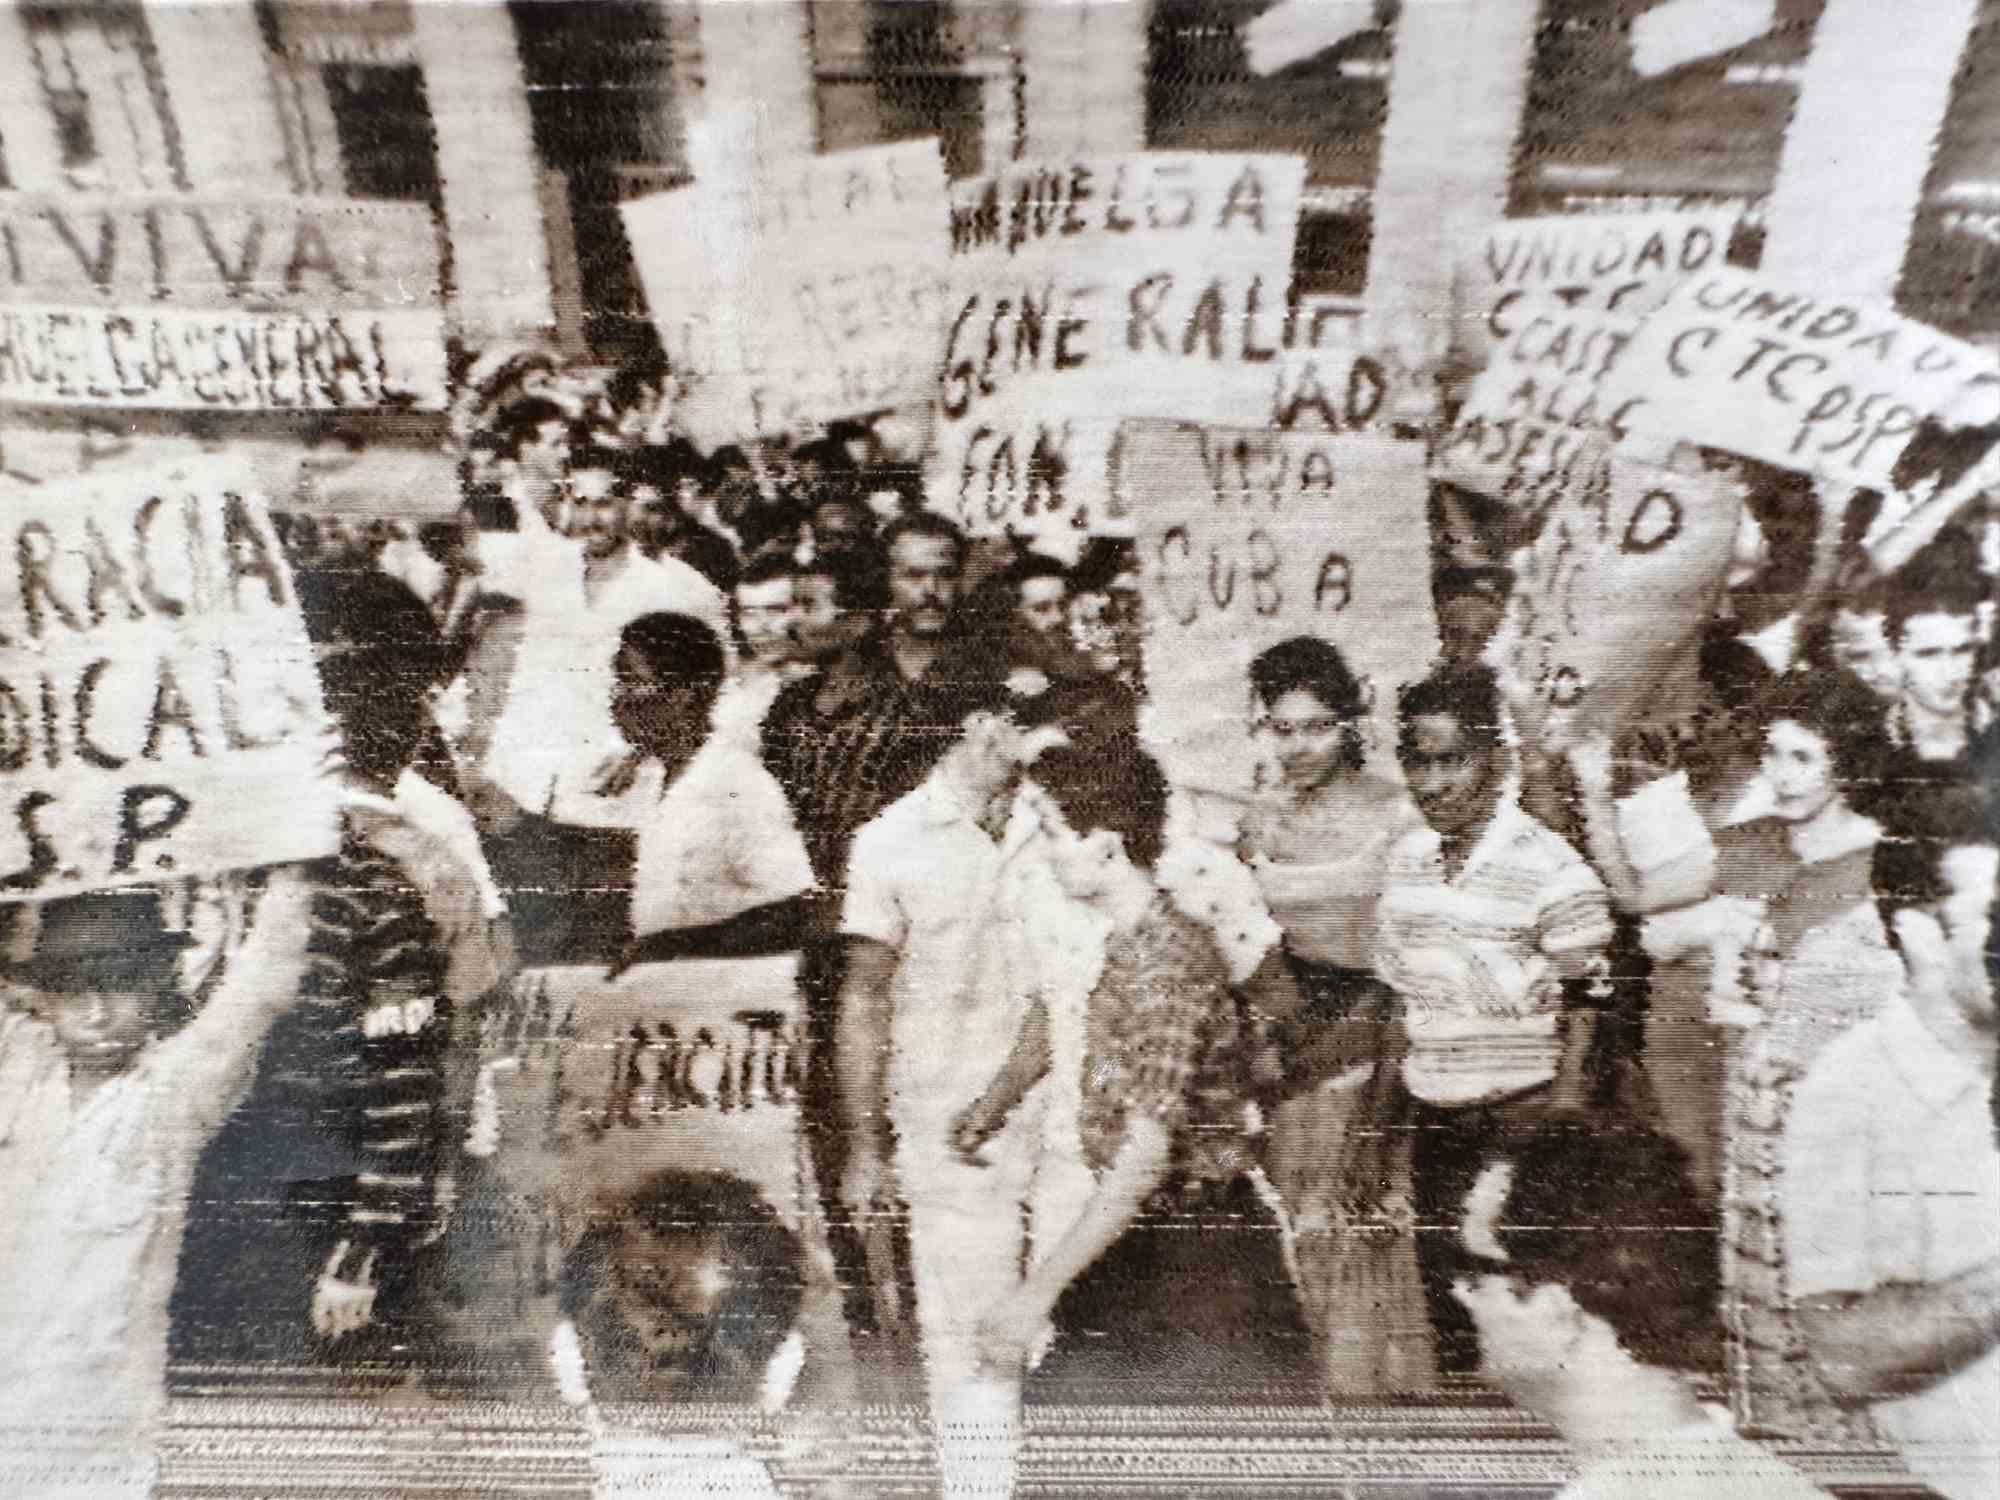 Fidel Castro Rebel's Forces - Historical Photo - 1960s